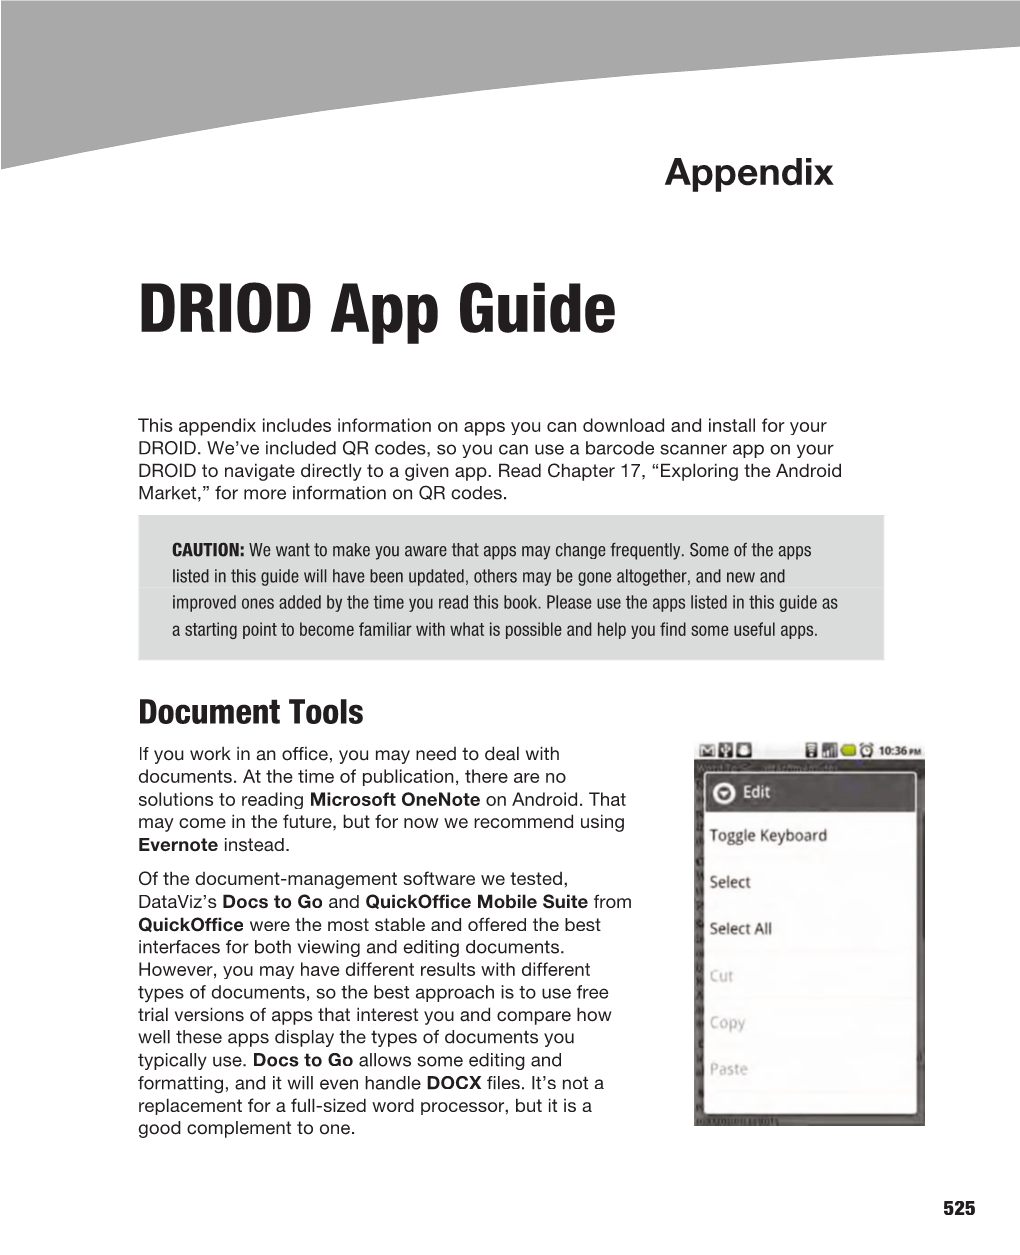 DRIOD App Guide